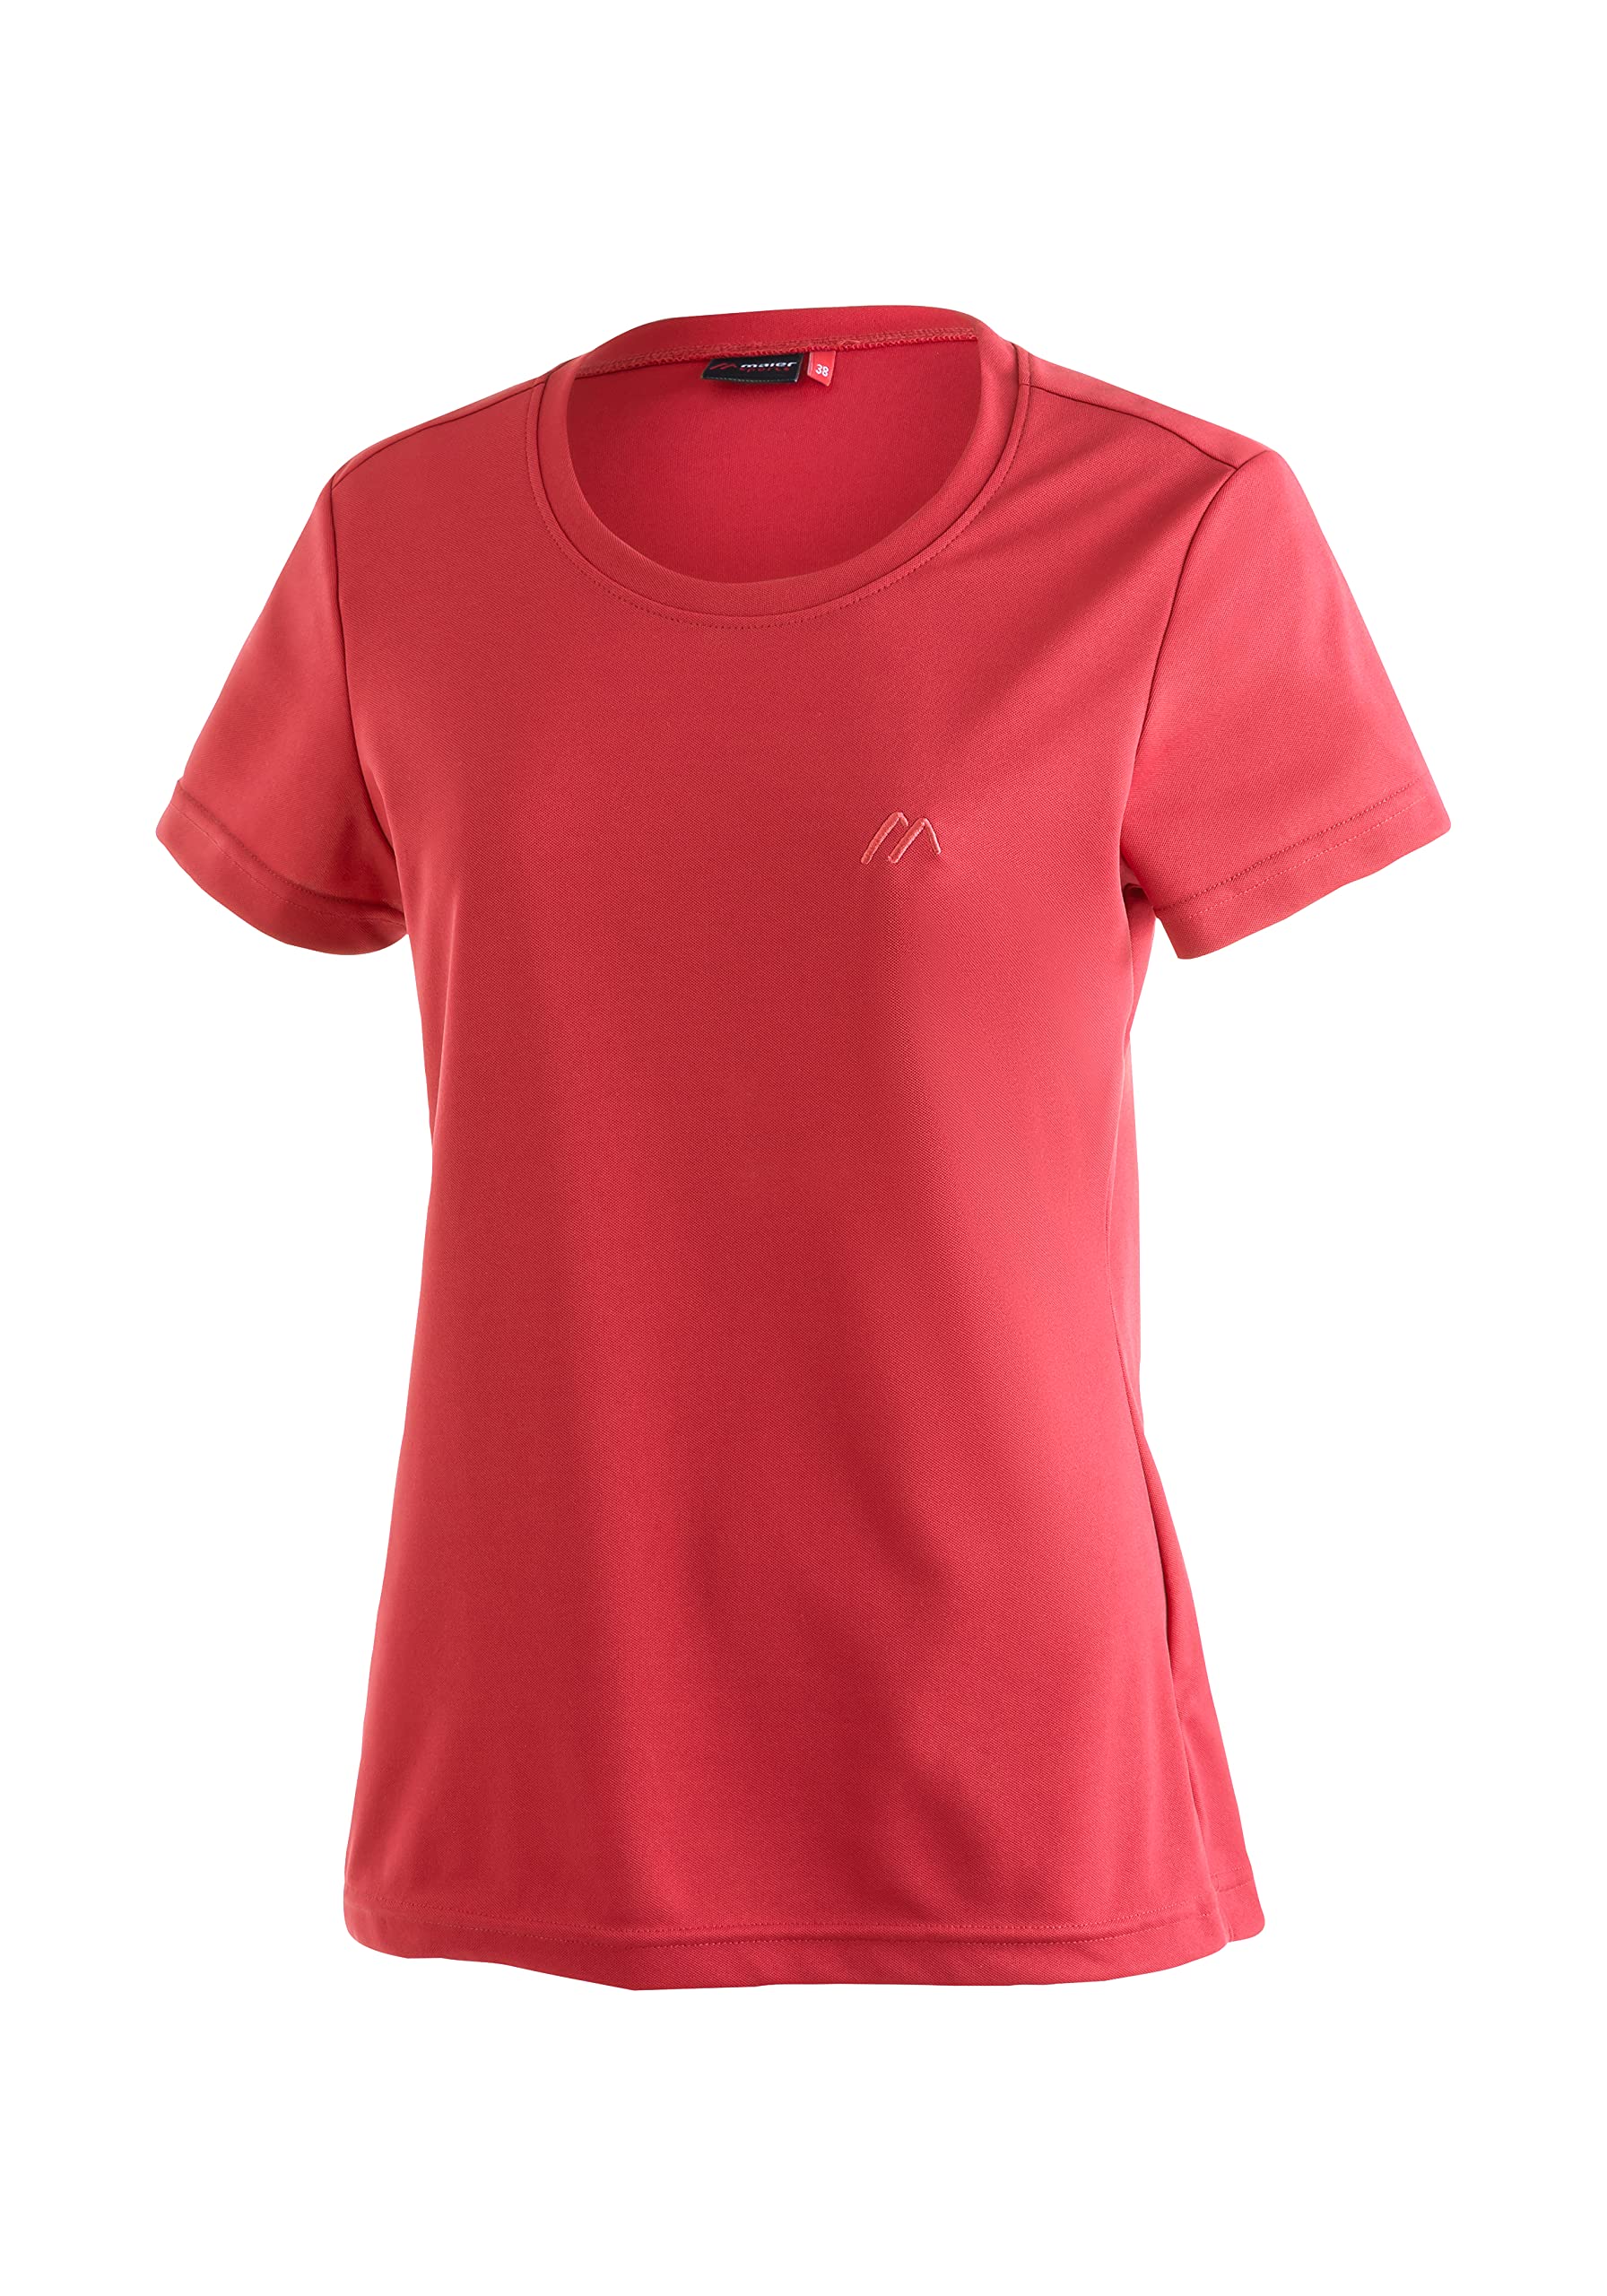 Maier Sports Damen T-Shirt Waltraud, einfarbiges Kurzarm Piqué-Shirt, Watermelon Red, 42